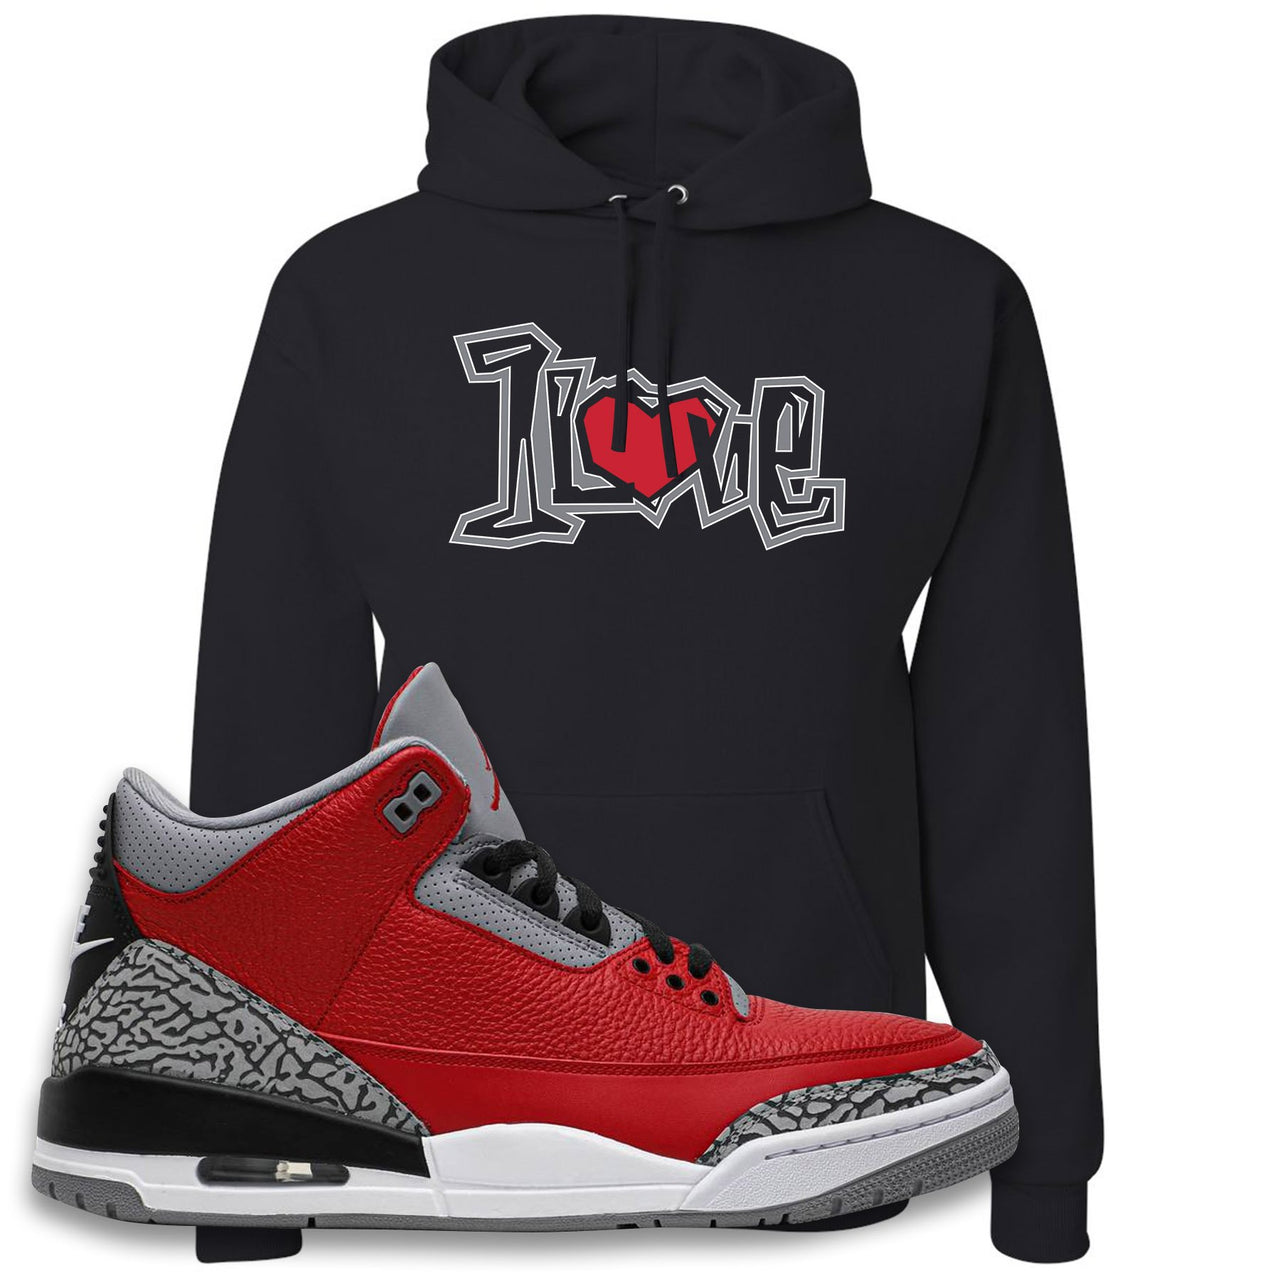 Chicago Exclusive Jordan 3 Red Cement Sneaker Oxford Crewneck Sweatshirt | Crewneck to match Jordan 3 All Star Red Cement Shoes | 1 Love